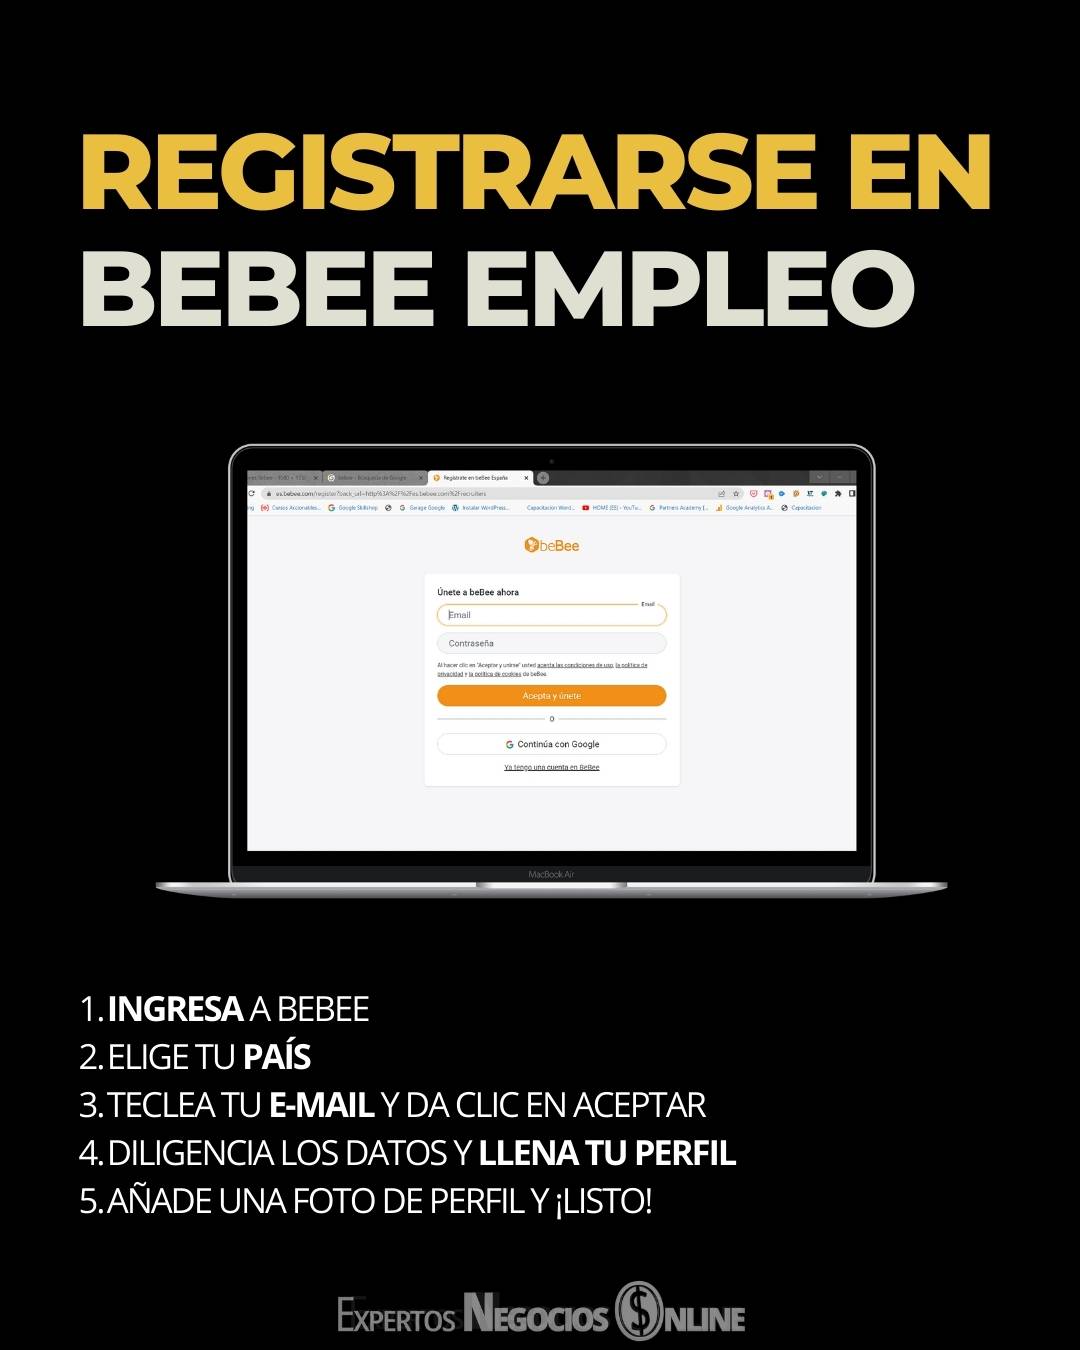 Bebee empleo registrarse